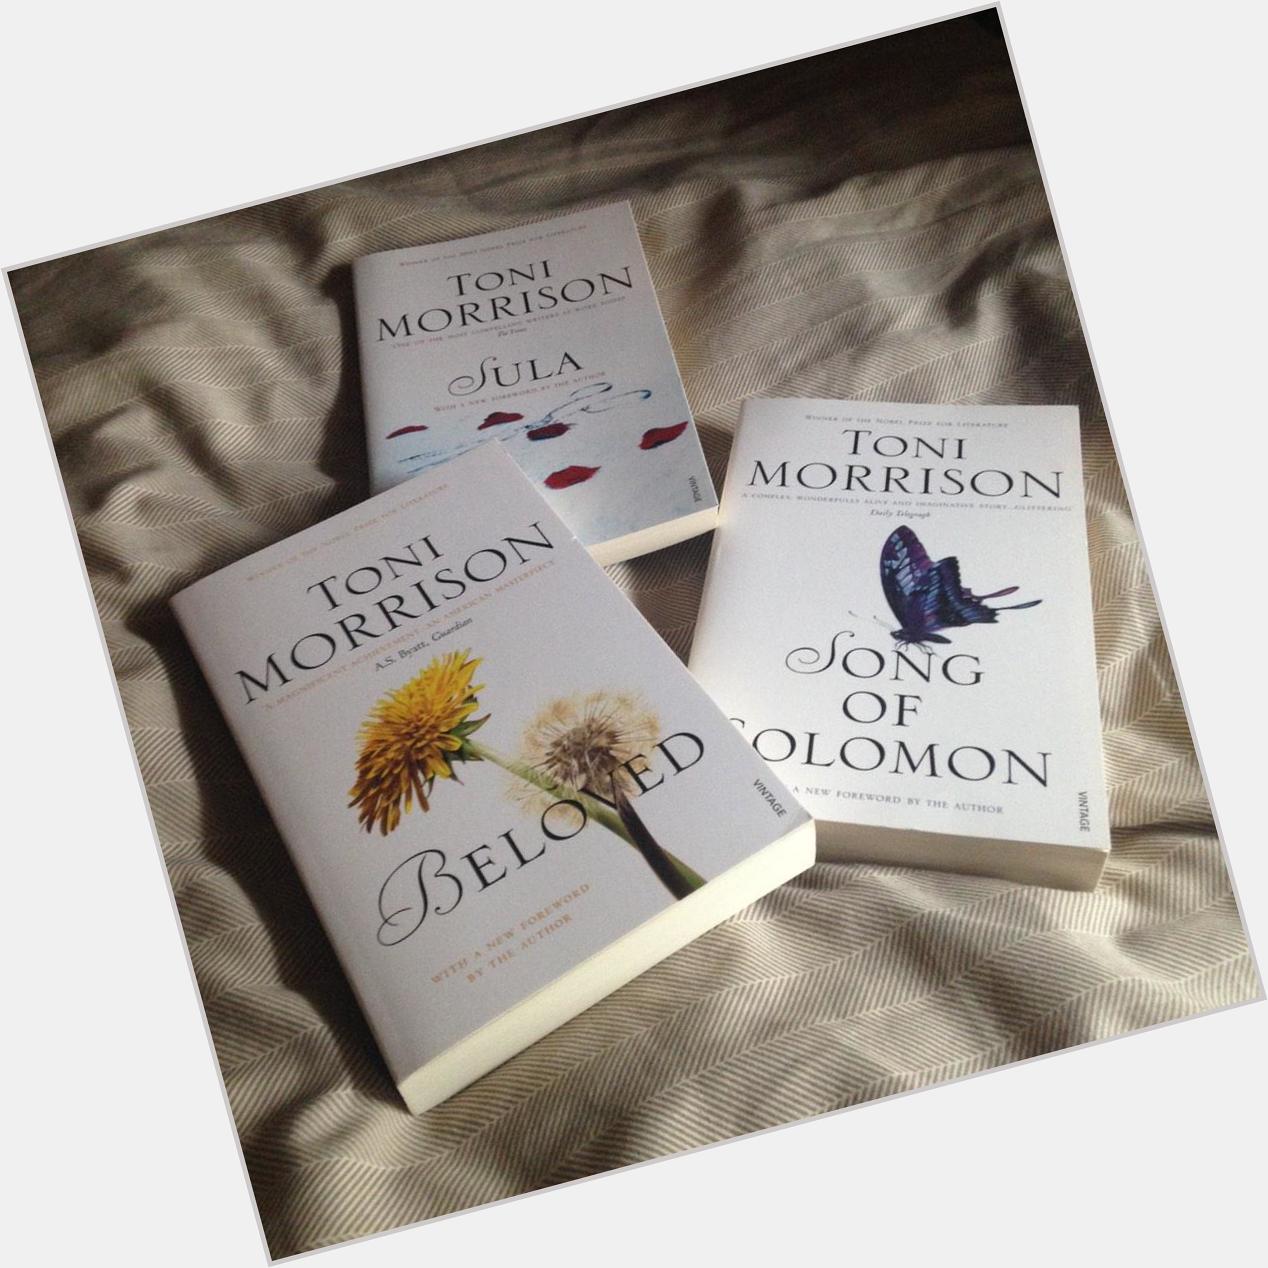 Happy birthday Toni Morrison! What\s your favourite Morrison novel? 